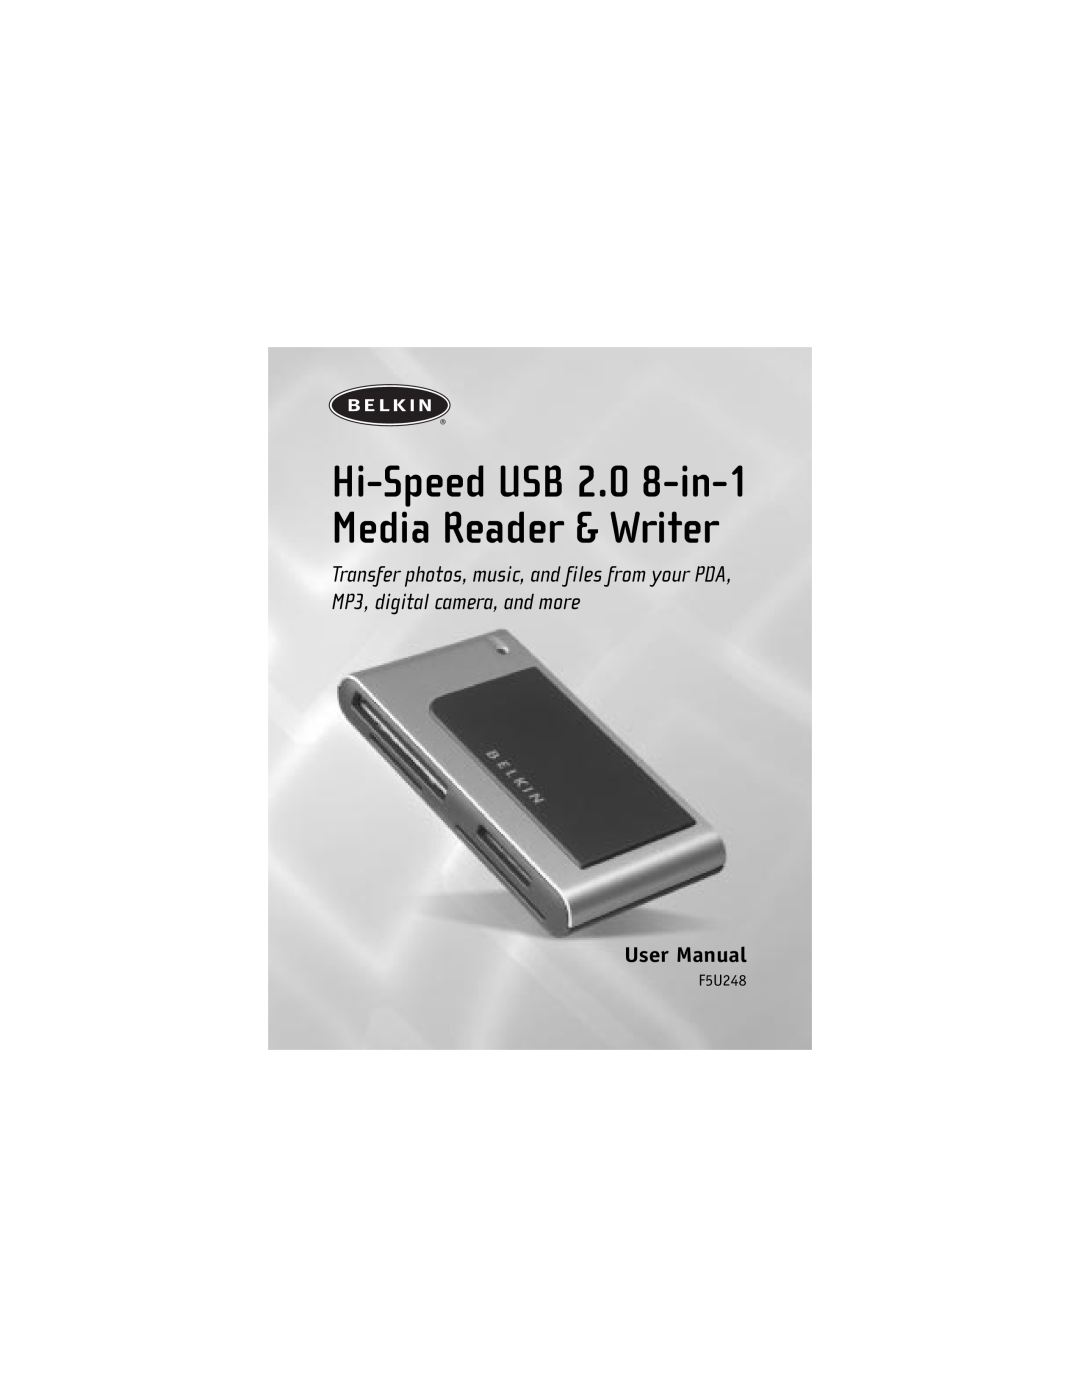 Belkin F5U248 user manual Hi-Speed USB 2.0 8-in-1 Media Reader & Writer 